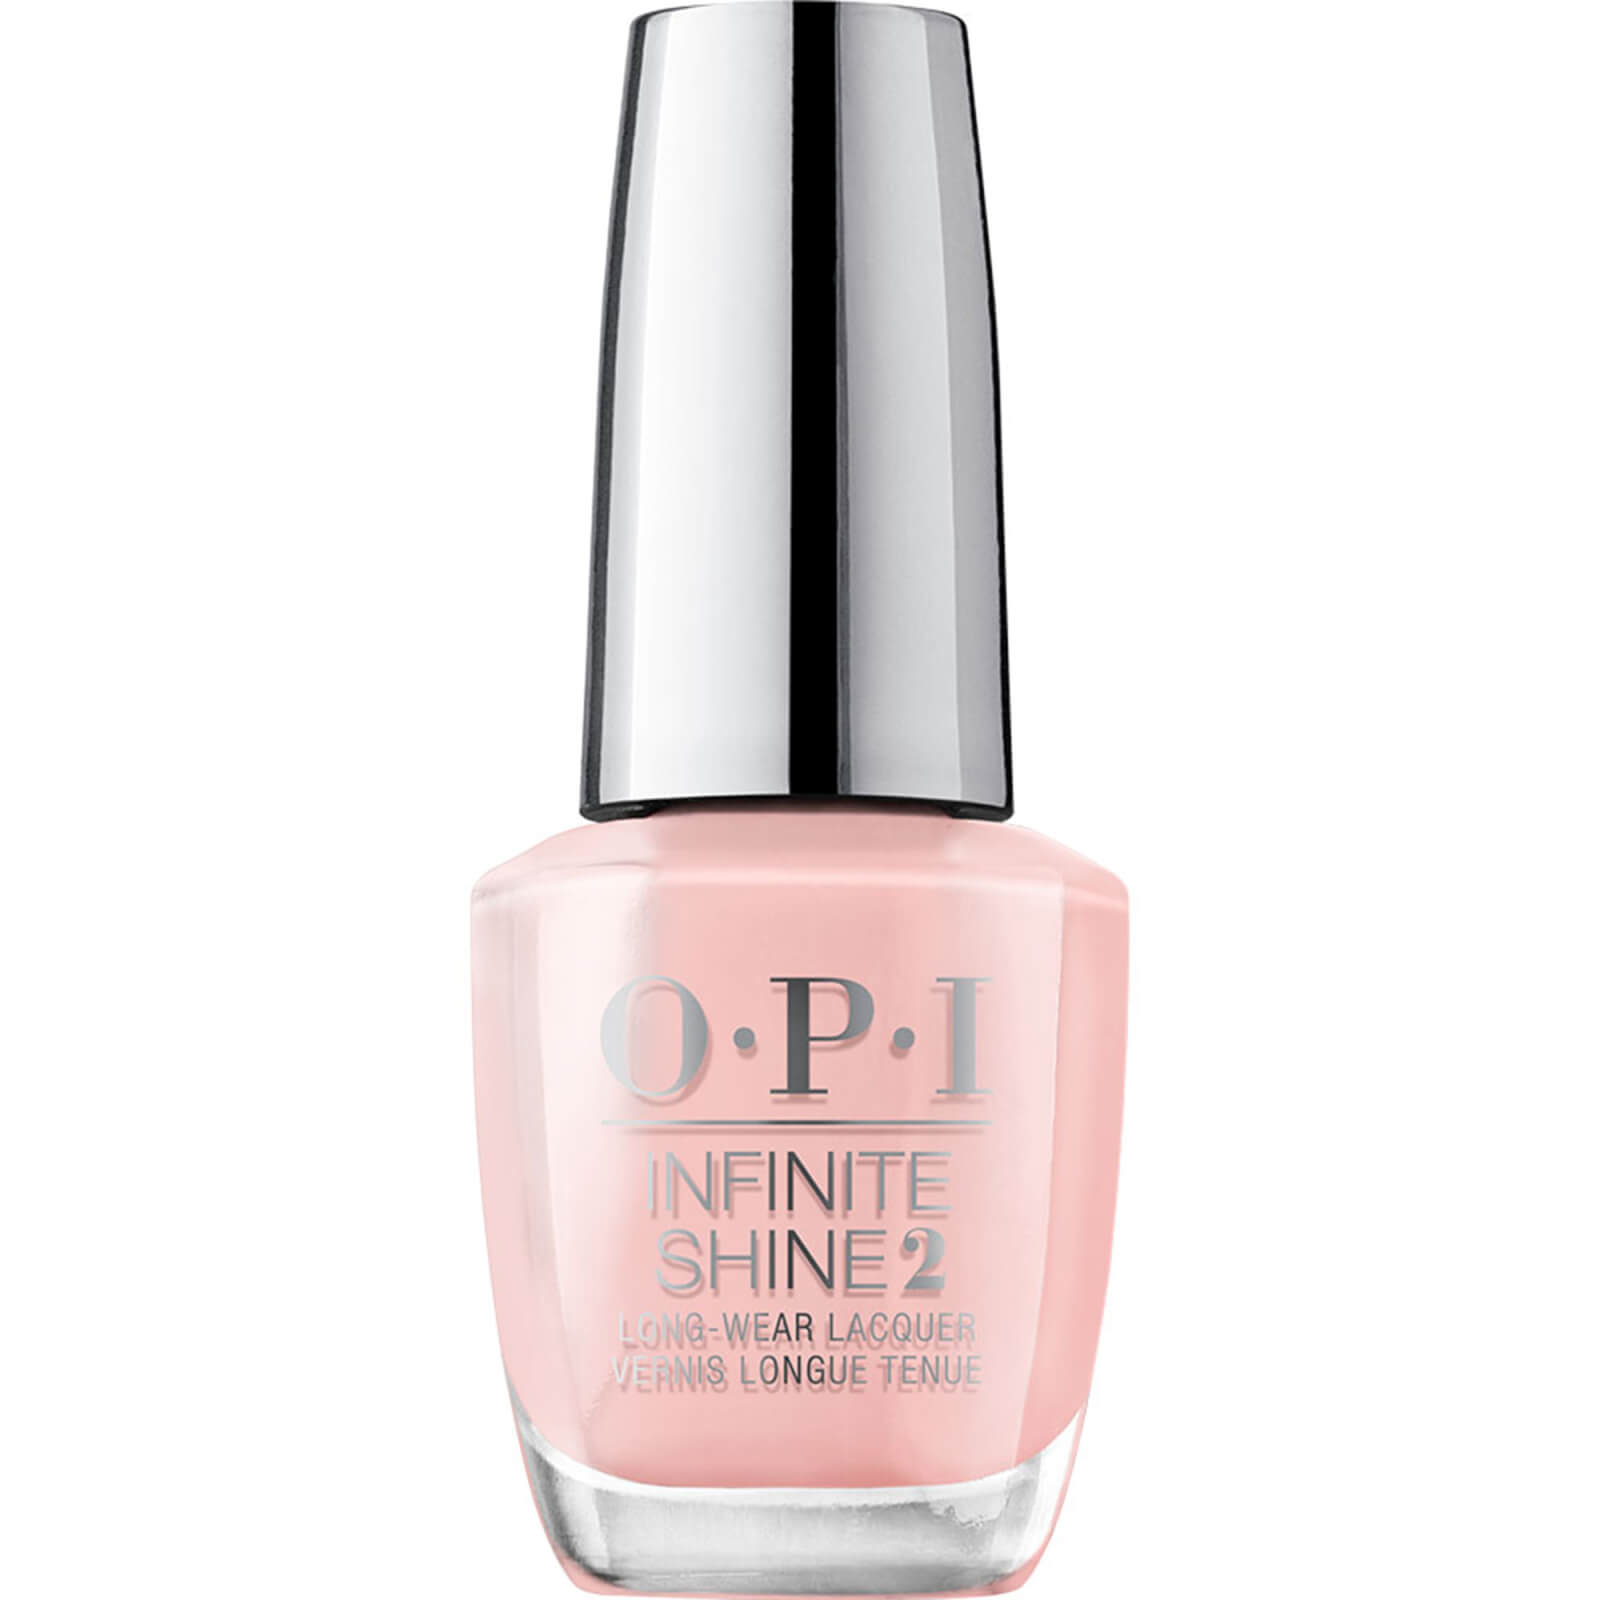 Image of OPI Infinite Shine Long-Wear Nail Polish - Passion 15ml